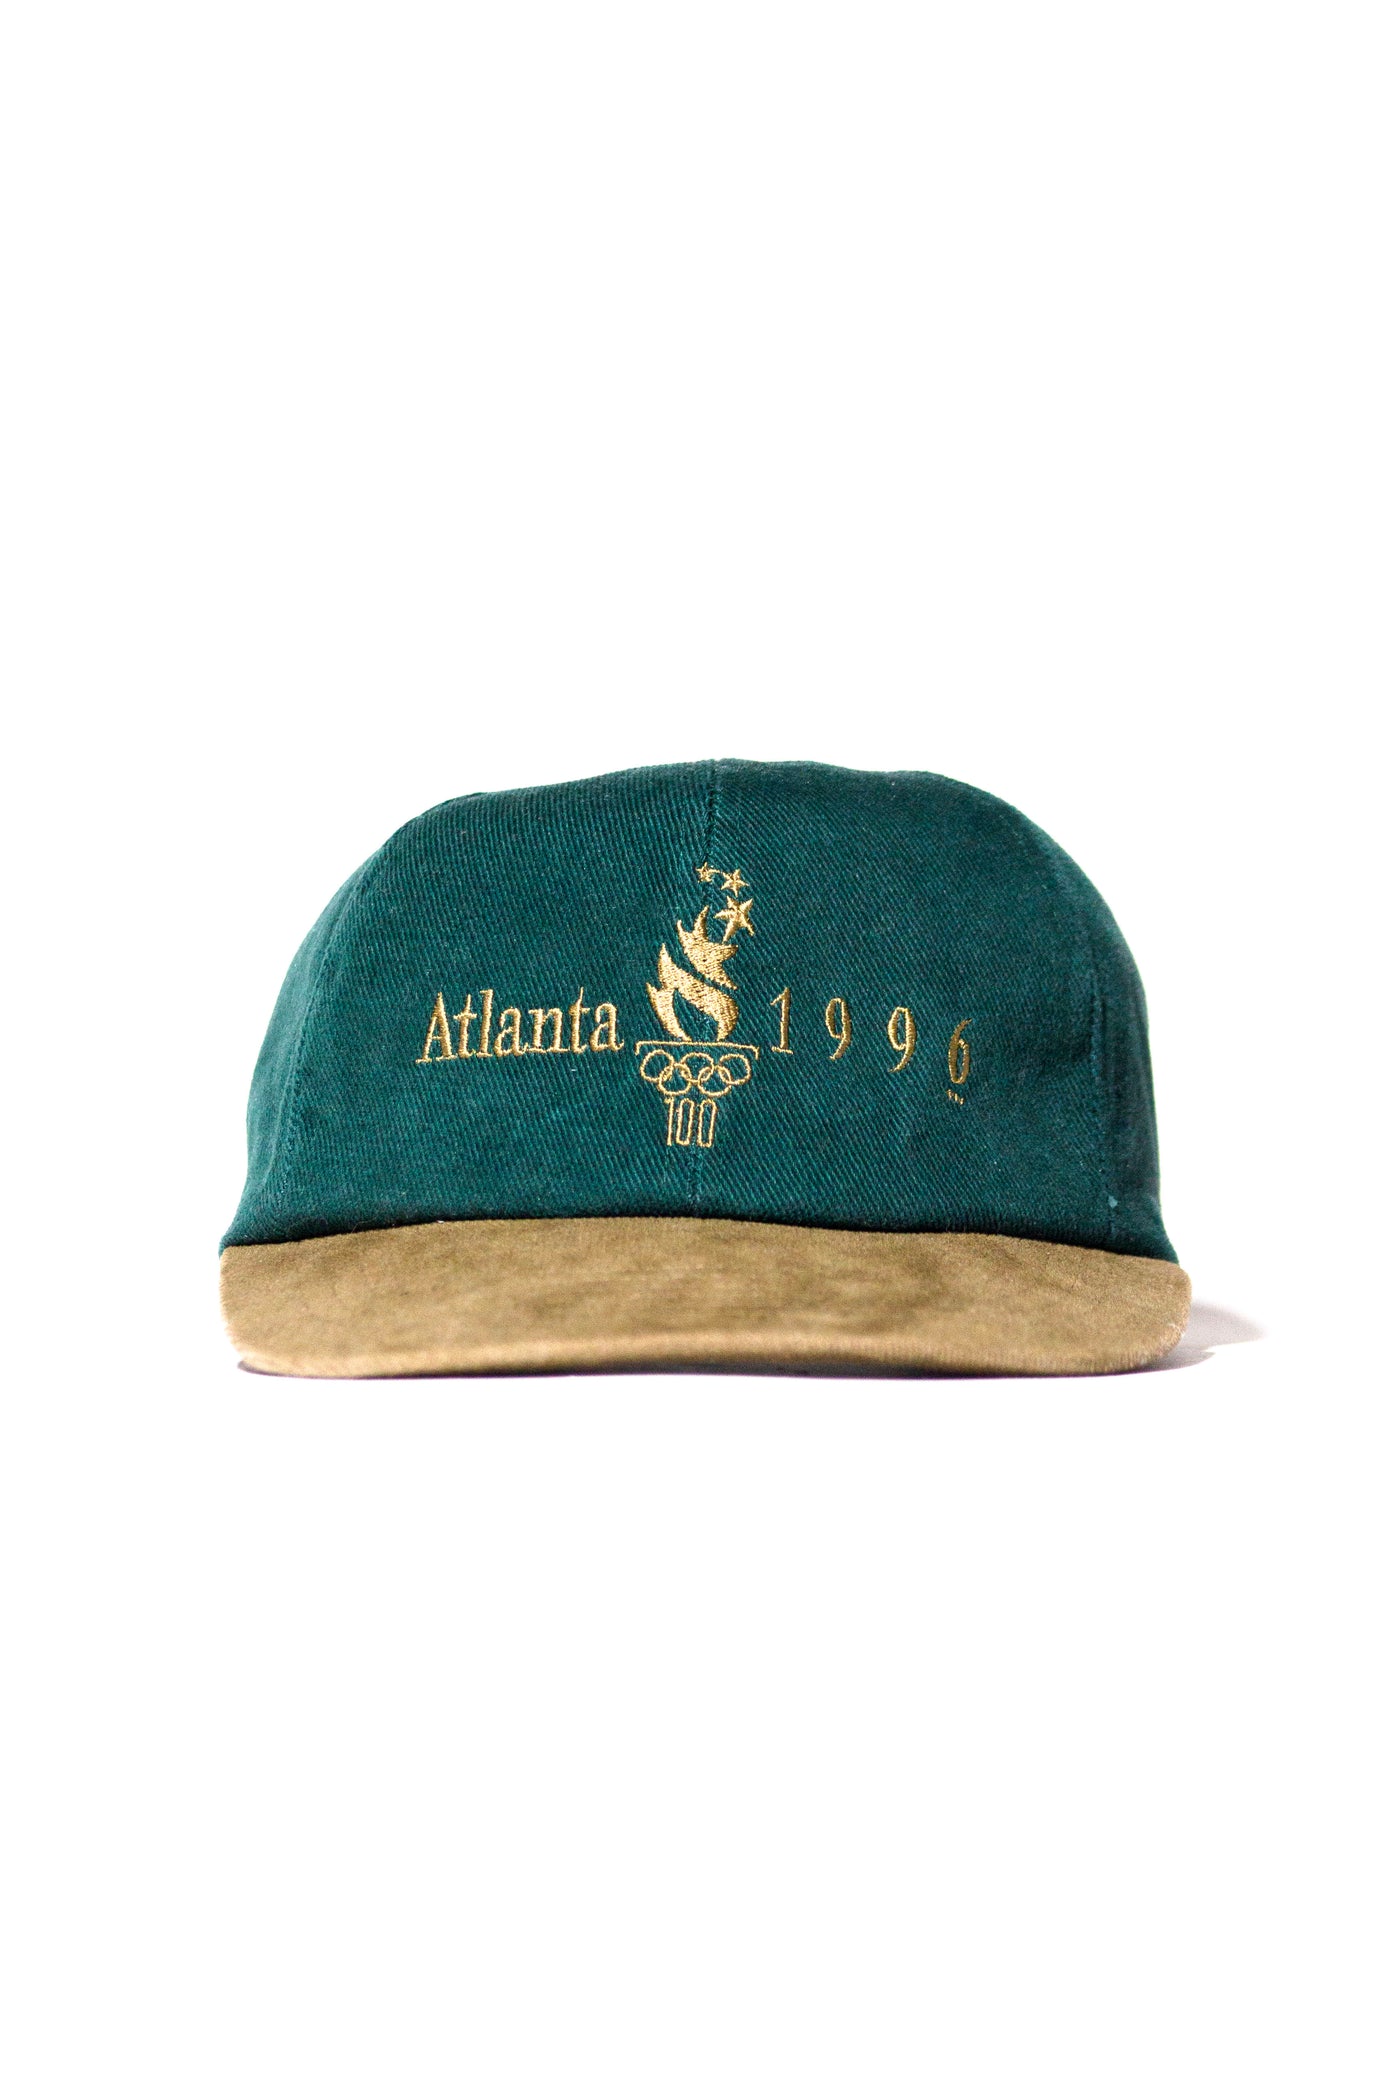 Vintage Atlanta 1996 Olympics Snapback